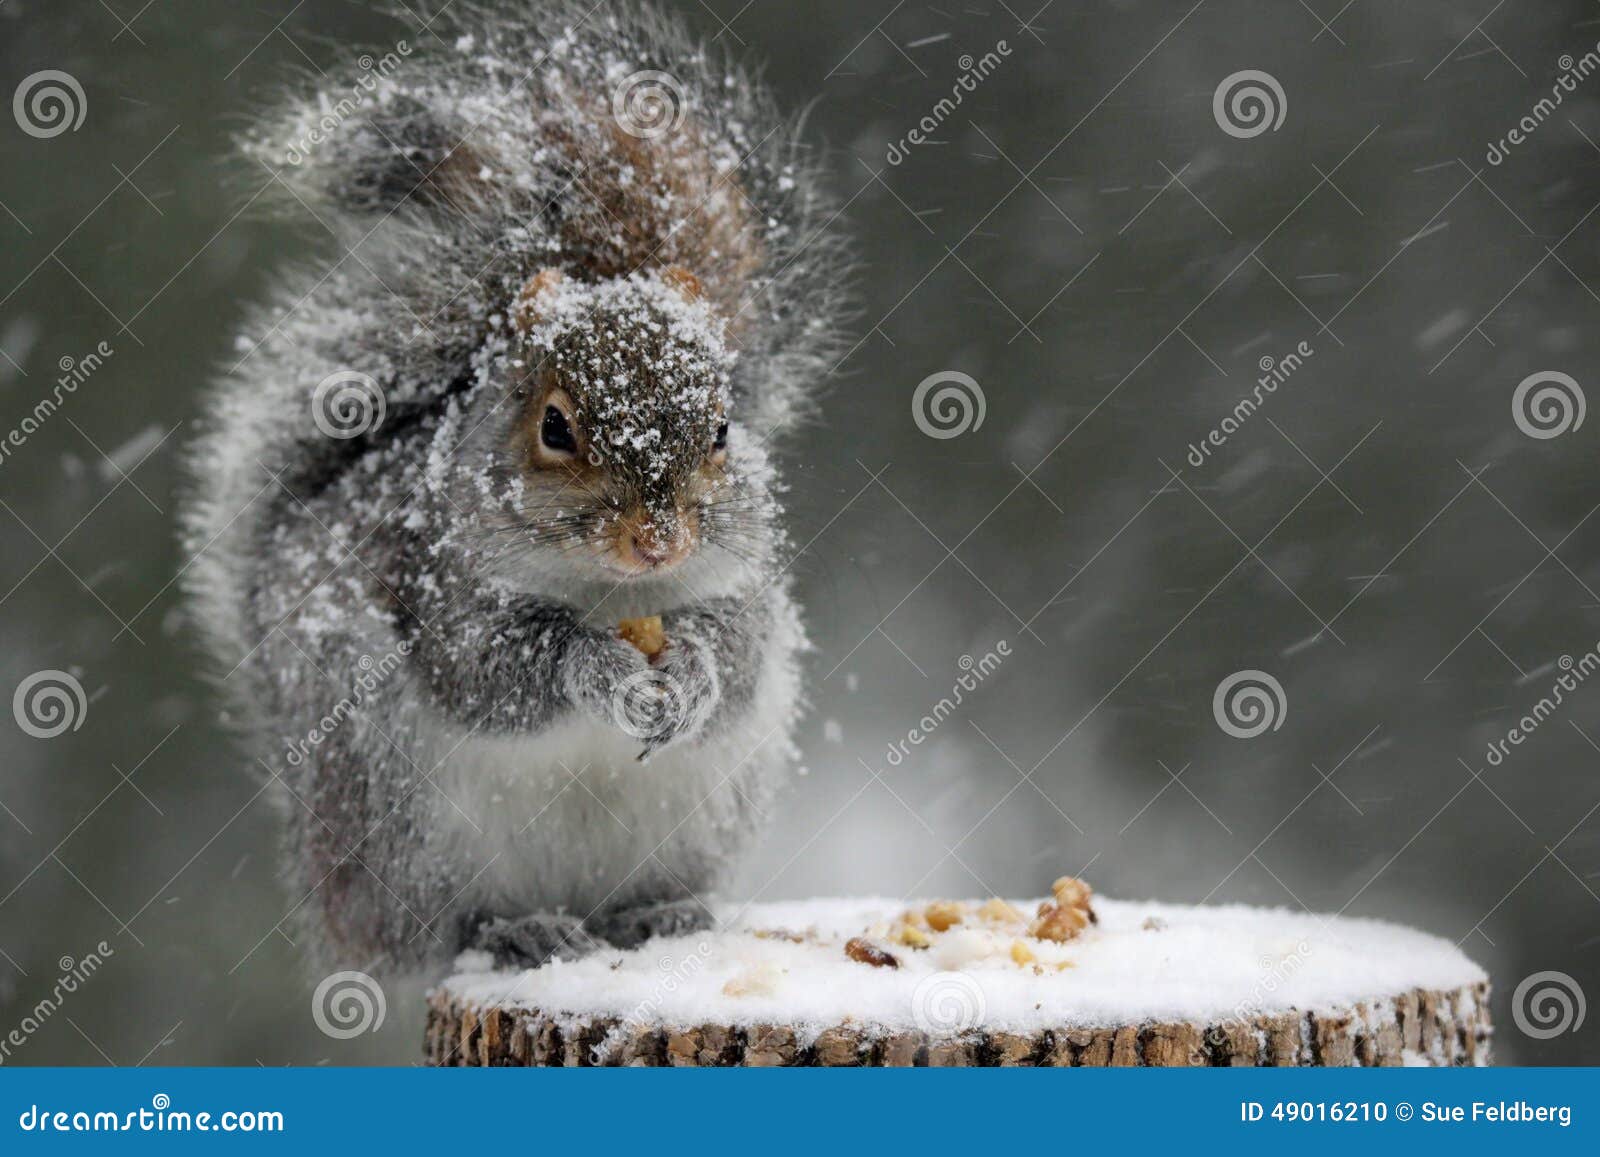 squirrel in winter